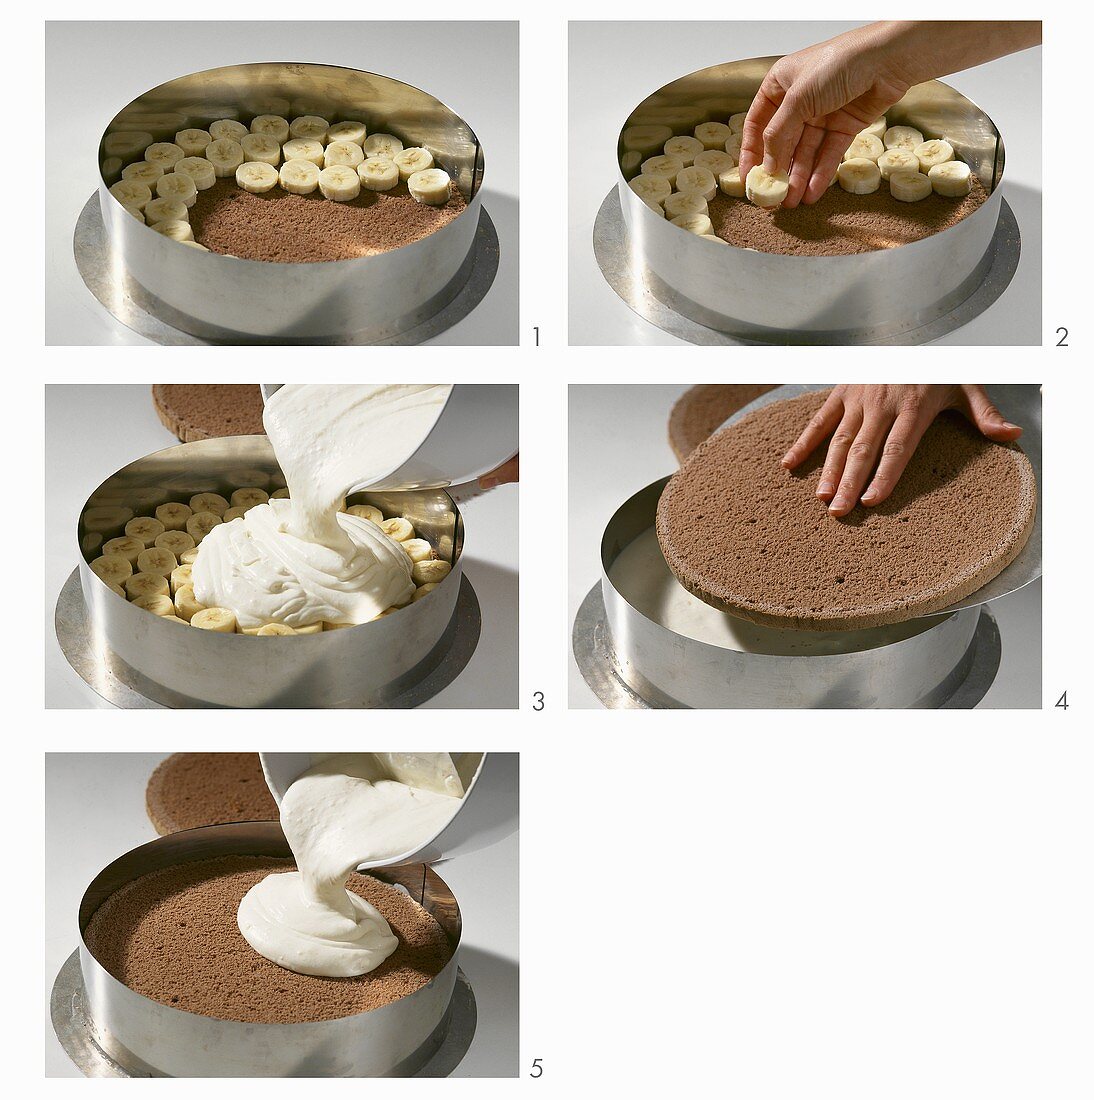 Making a chocolate banana cake with yoghurt cream